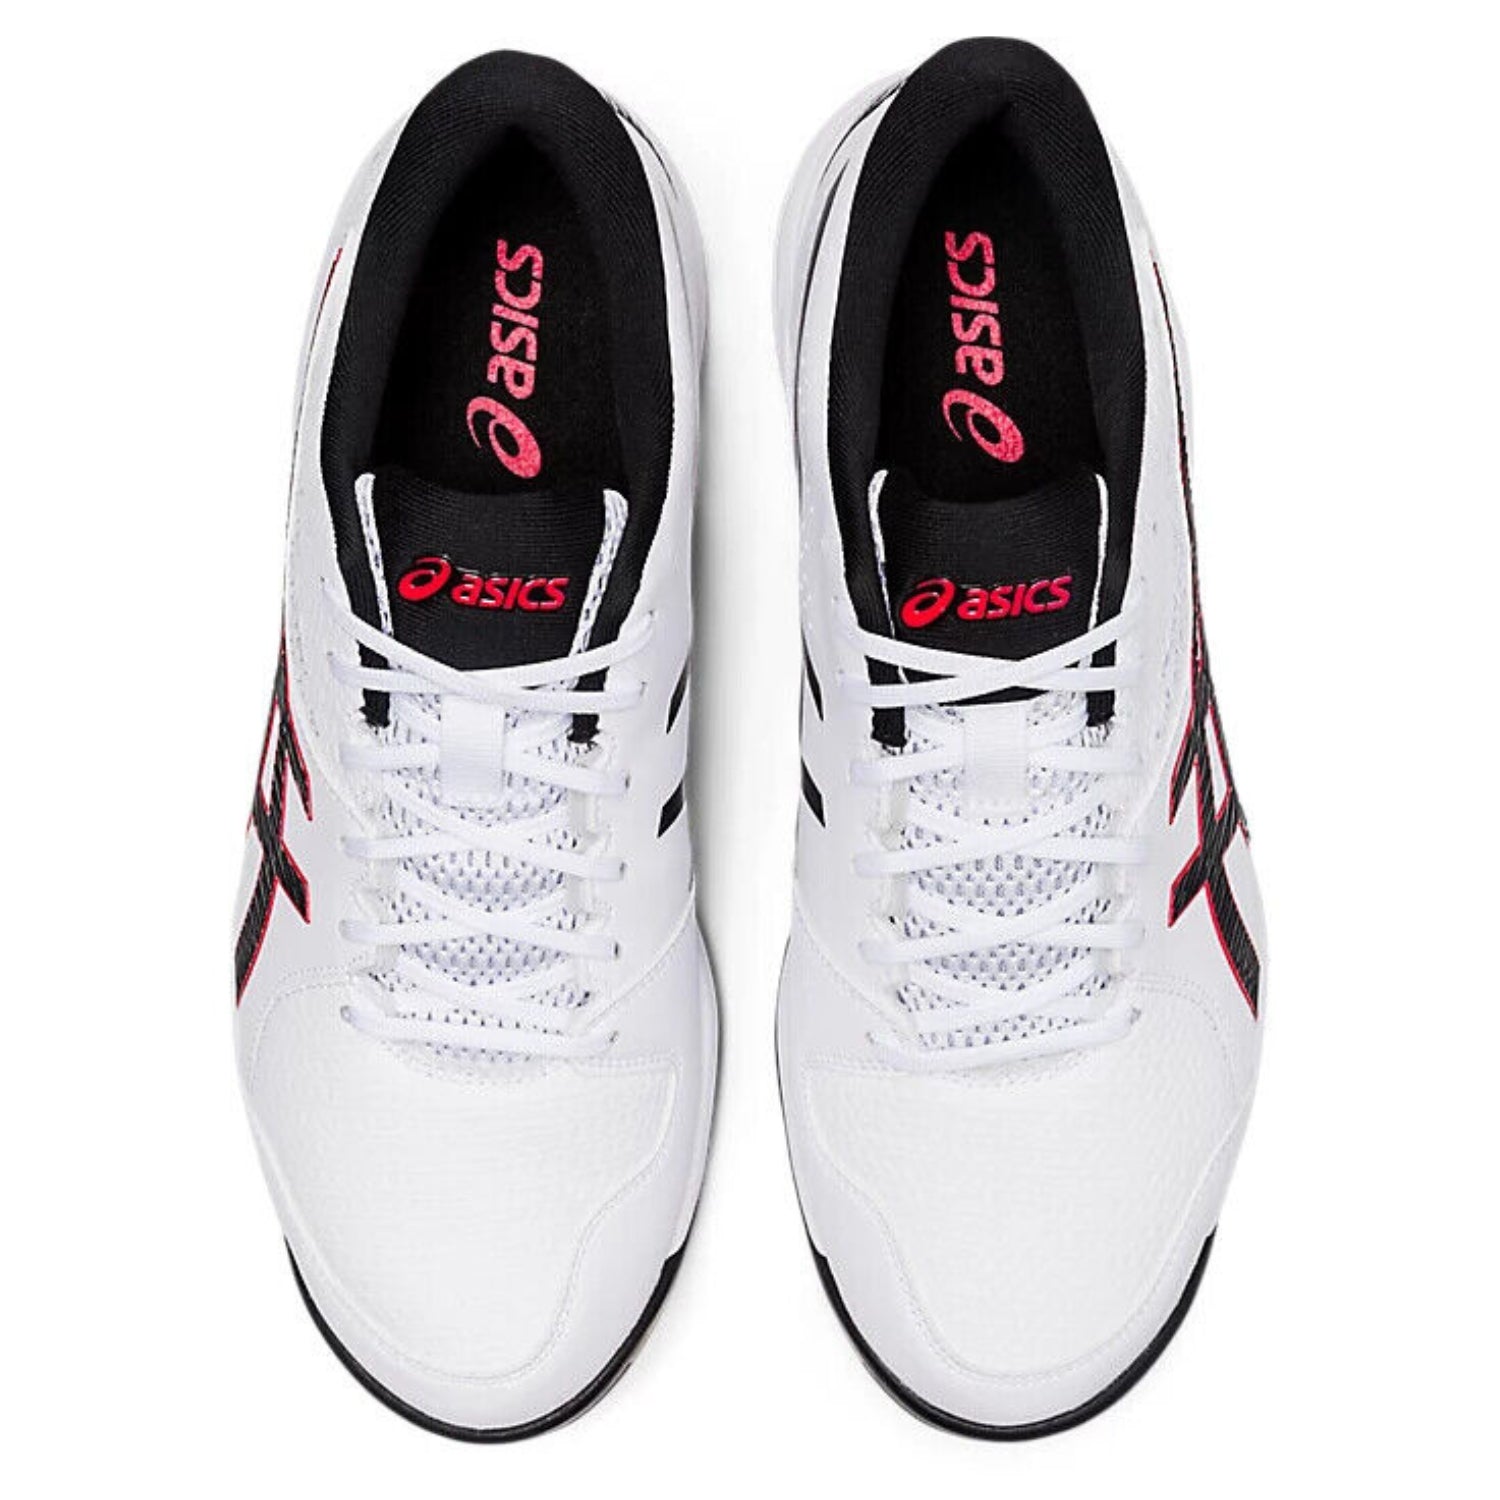 Asics Cricket Shoes, Model Gel-Peake 2, White/Black